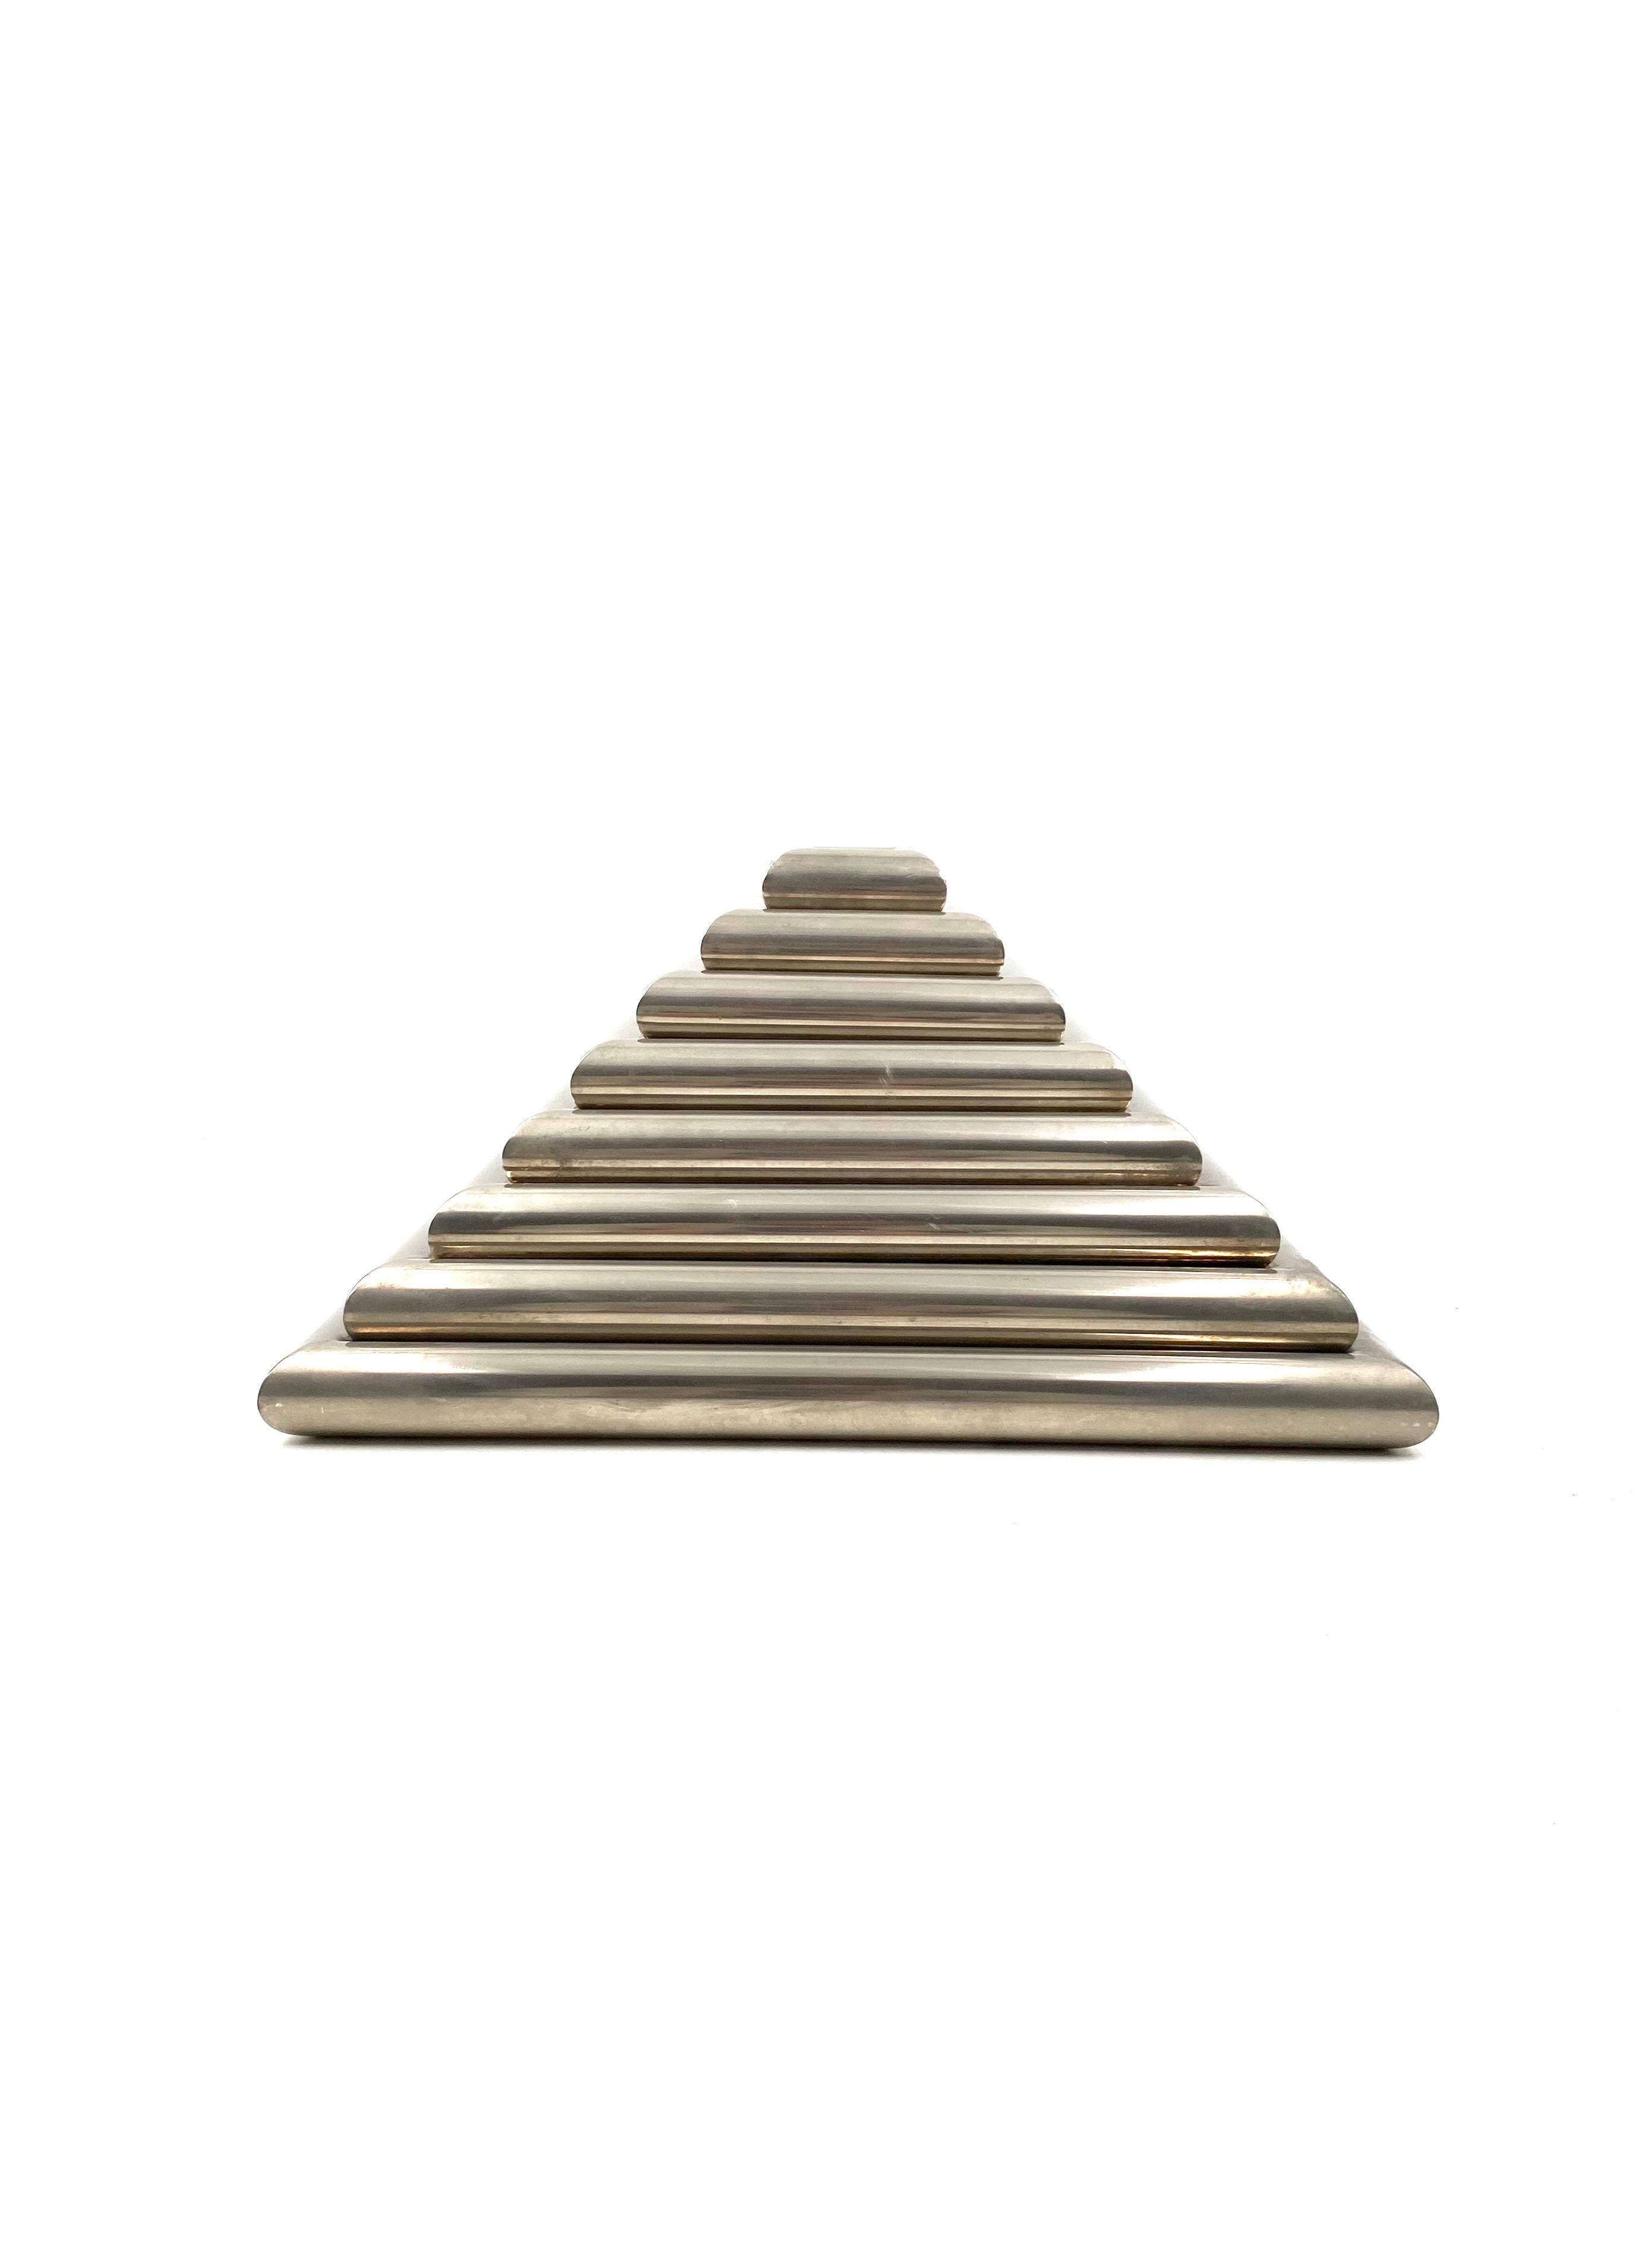 Ziggurat-Shaped Stacked Trays / Vide Poche Sculpture, Italy, 1970s 7